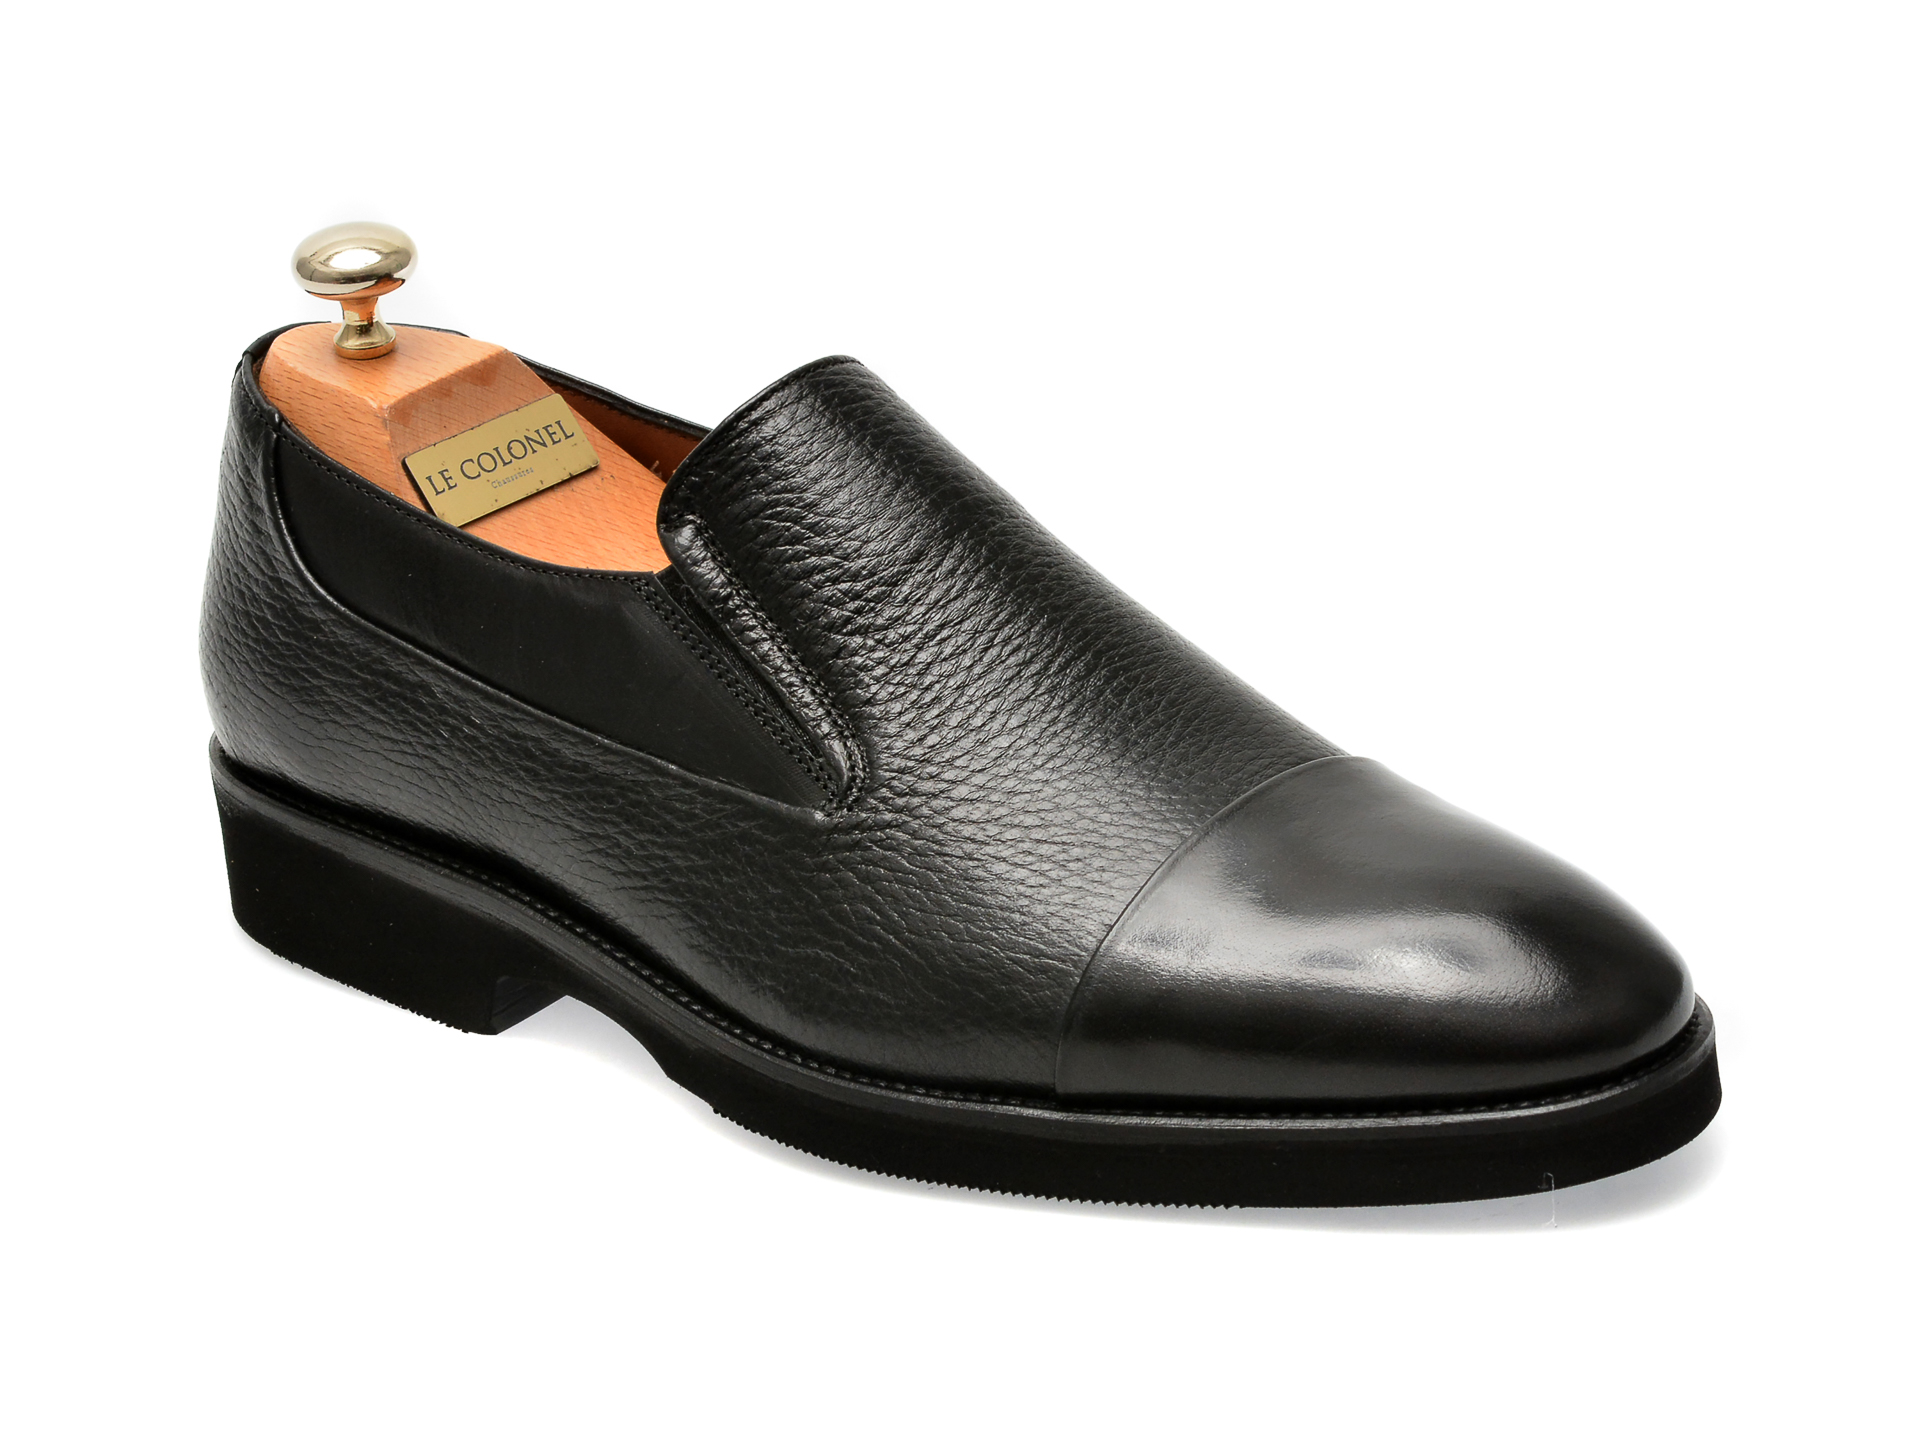 Pantofi LE COLONEL negri, 49879, din piele naturala /barbati/pantofi